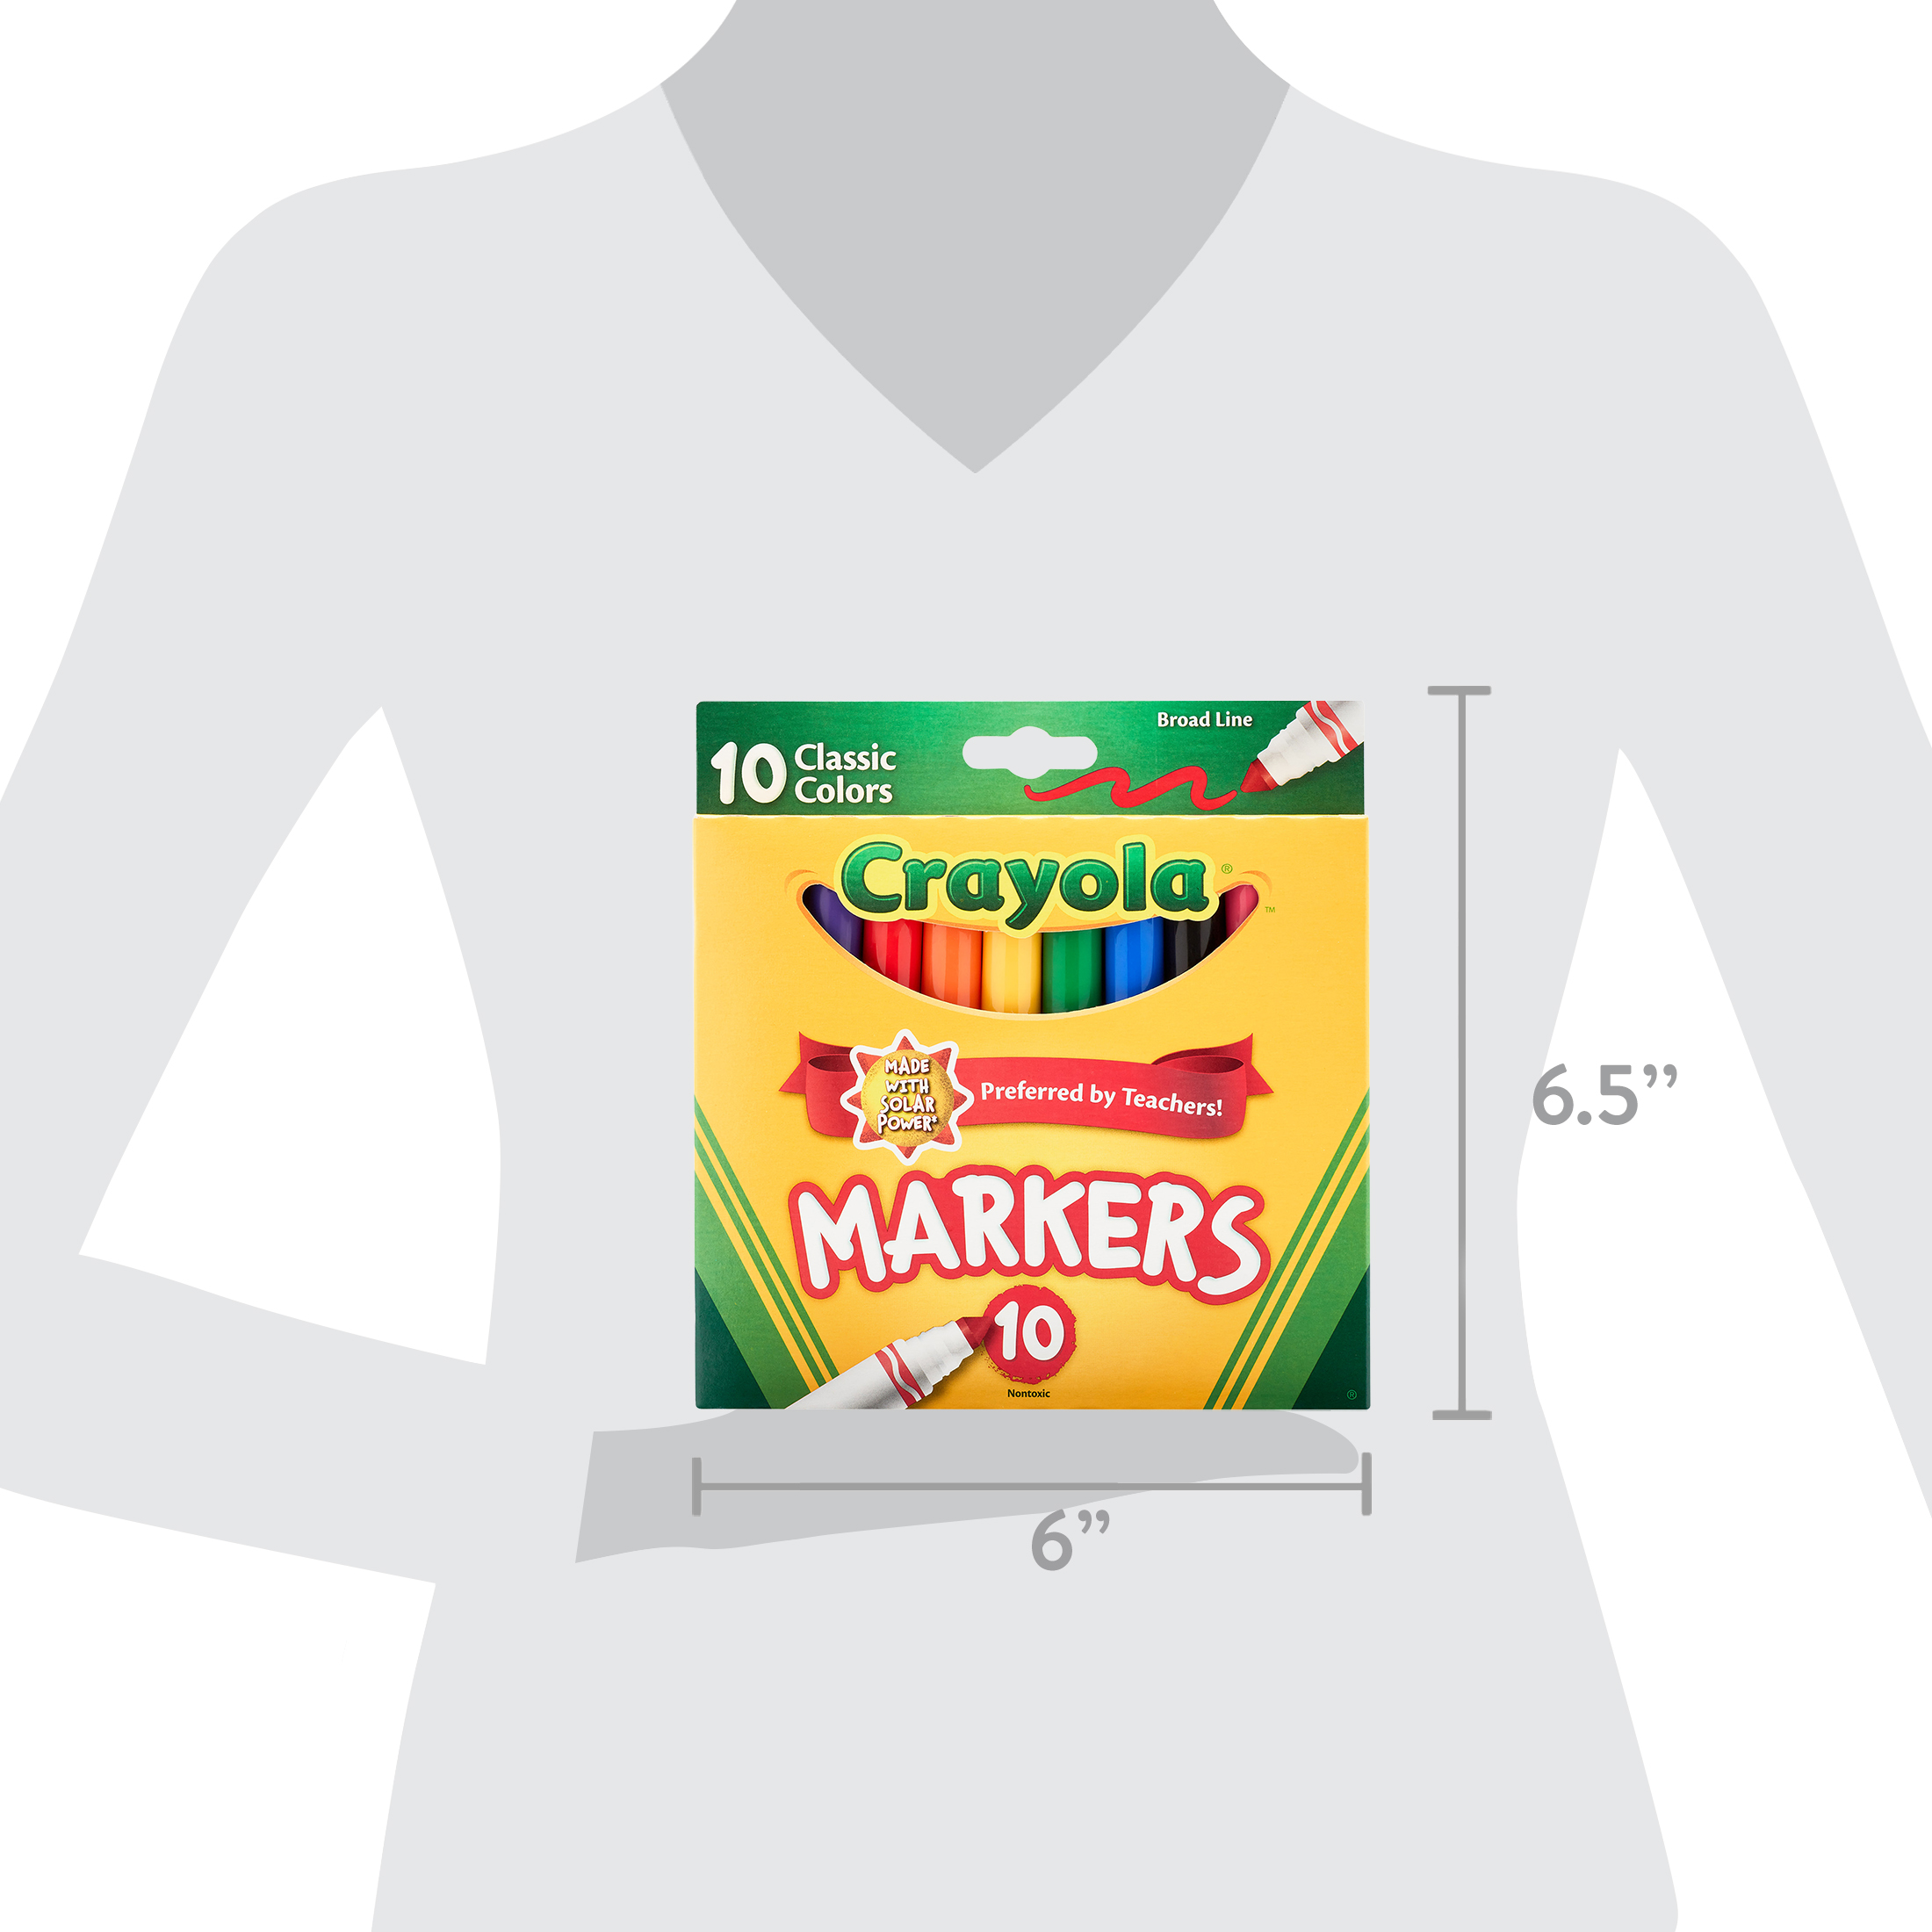 Crayola Broad Line Markers, 10 Ct, School Supplies for Kids, Teacher Supplies, Beginner Child - image 9 of 9